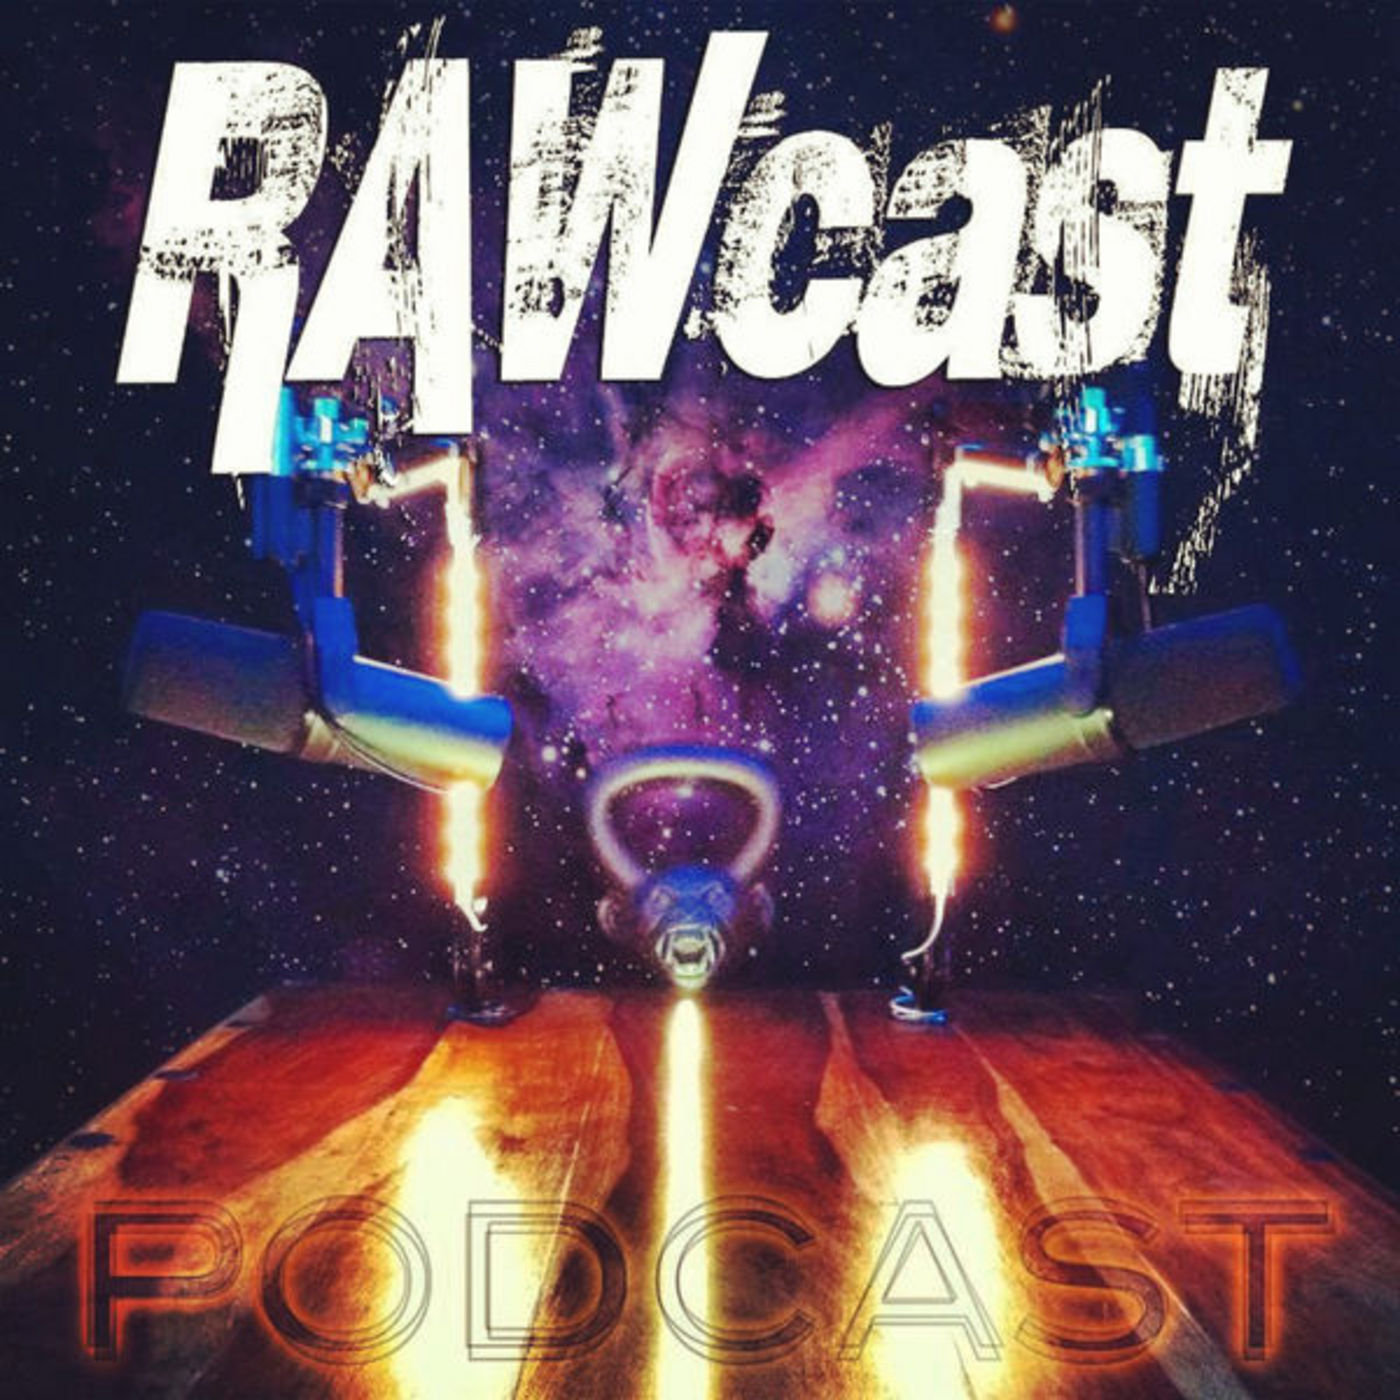 Rawcast Podcast